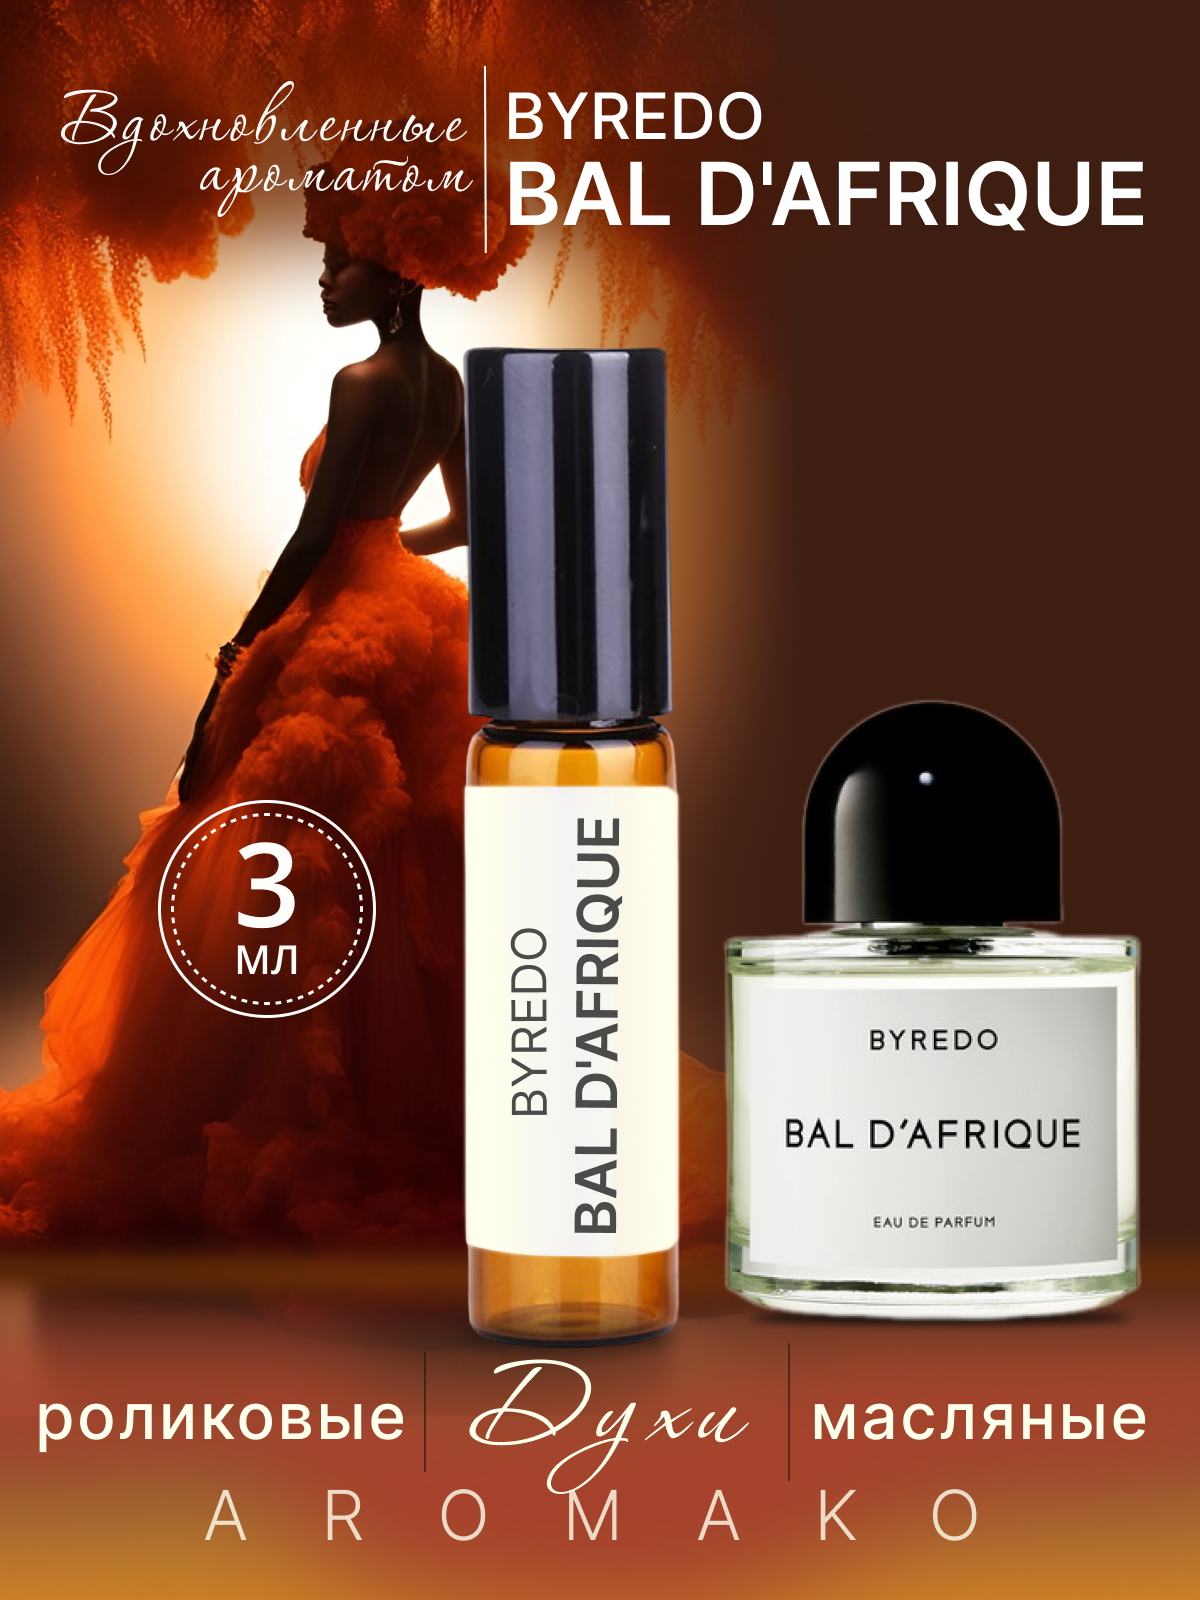 Духи масляные, парфюм - ролик по мотивам Bal d'Afrique, Byredo 3 мл, AROMAKO